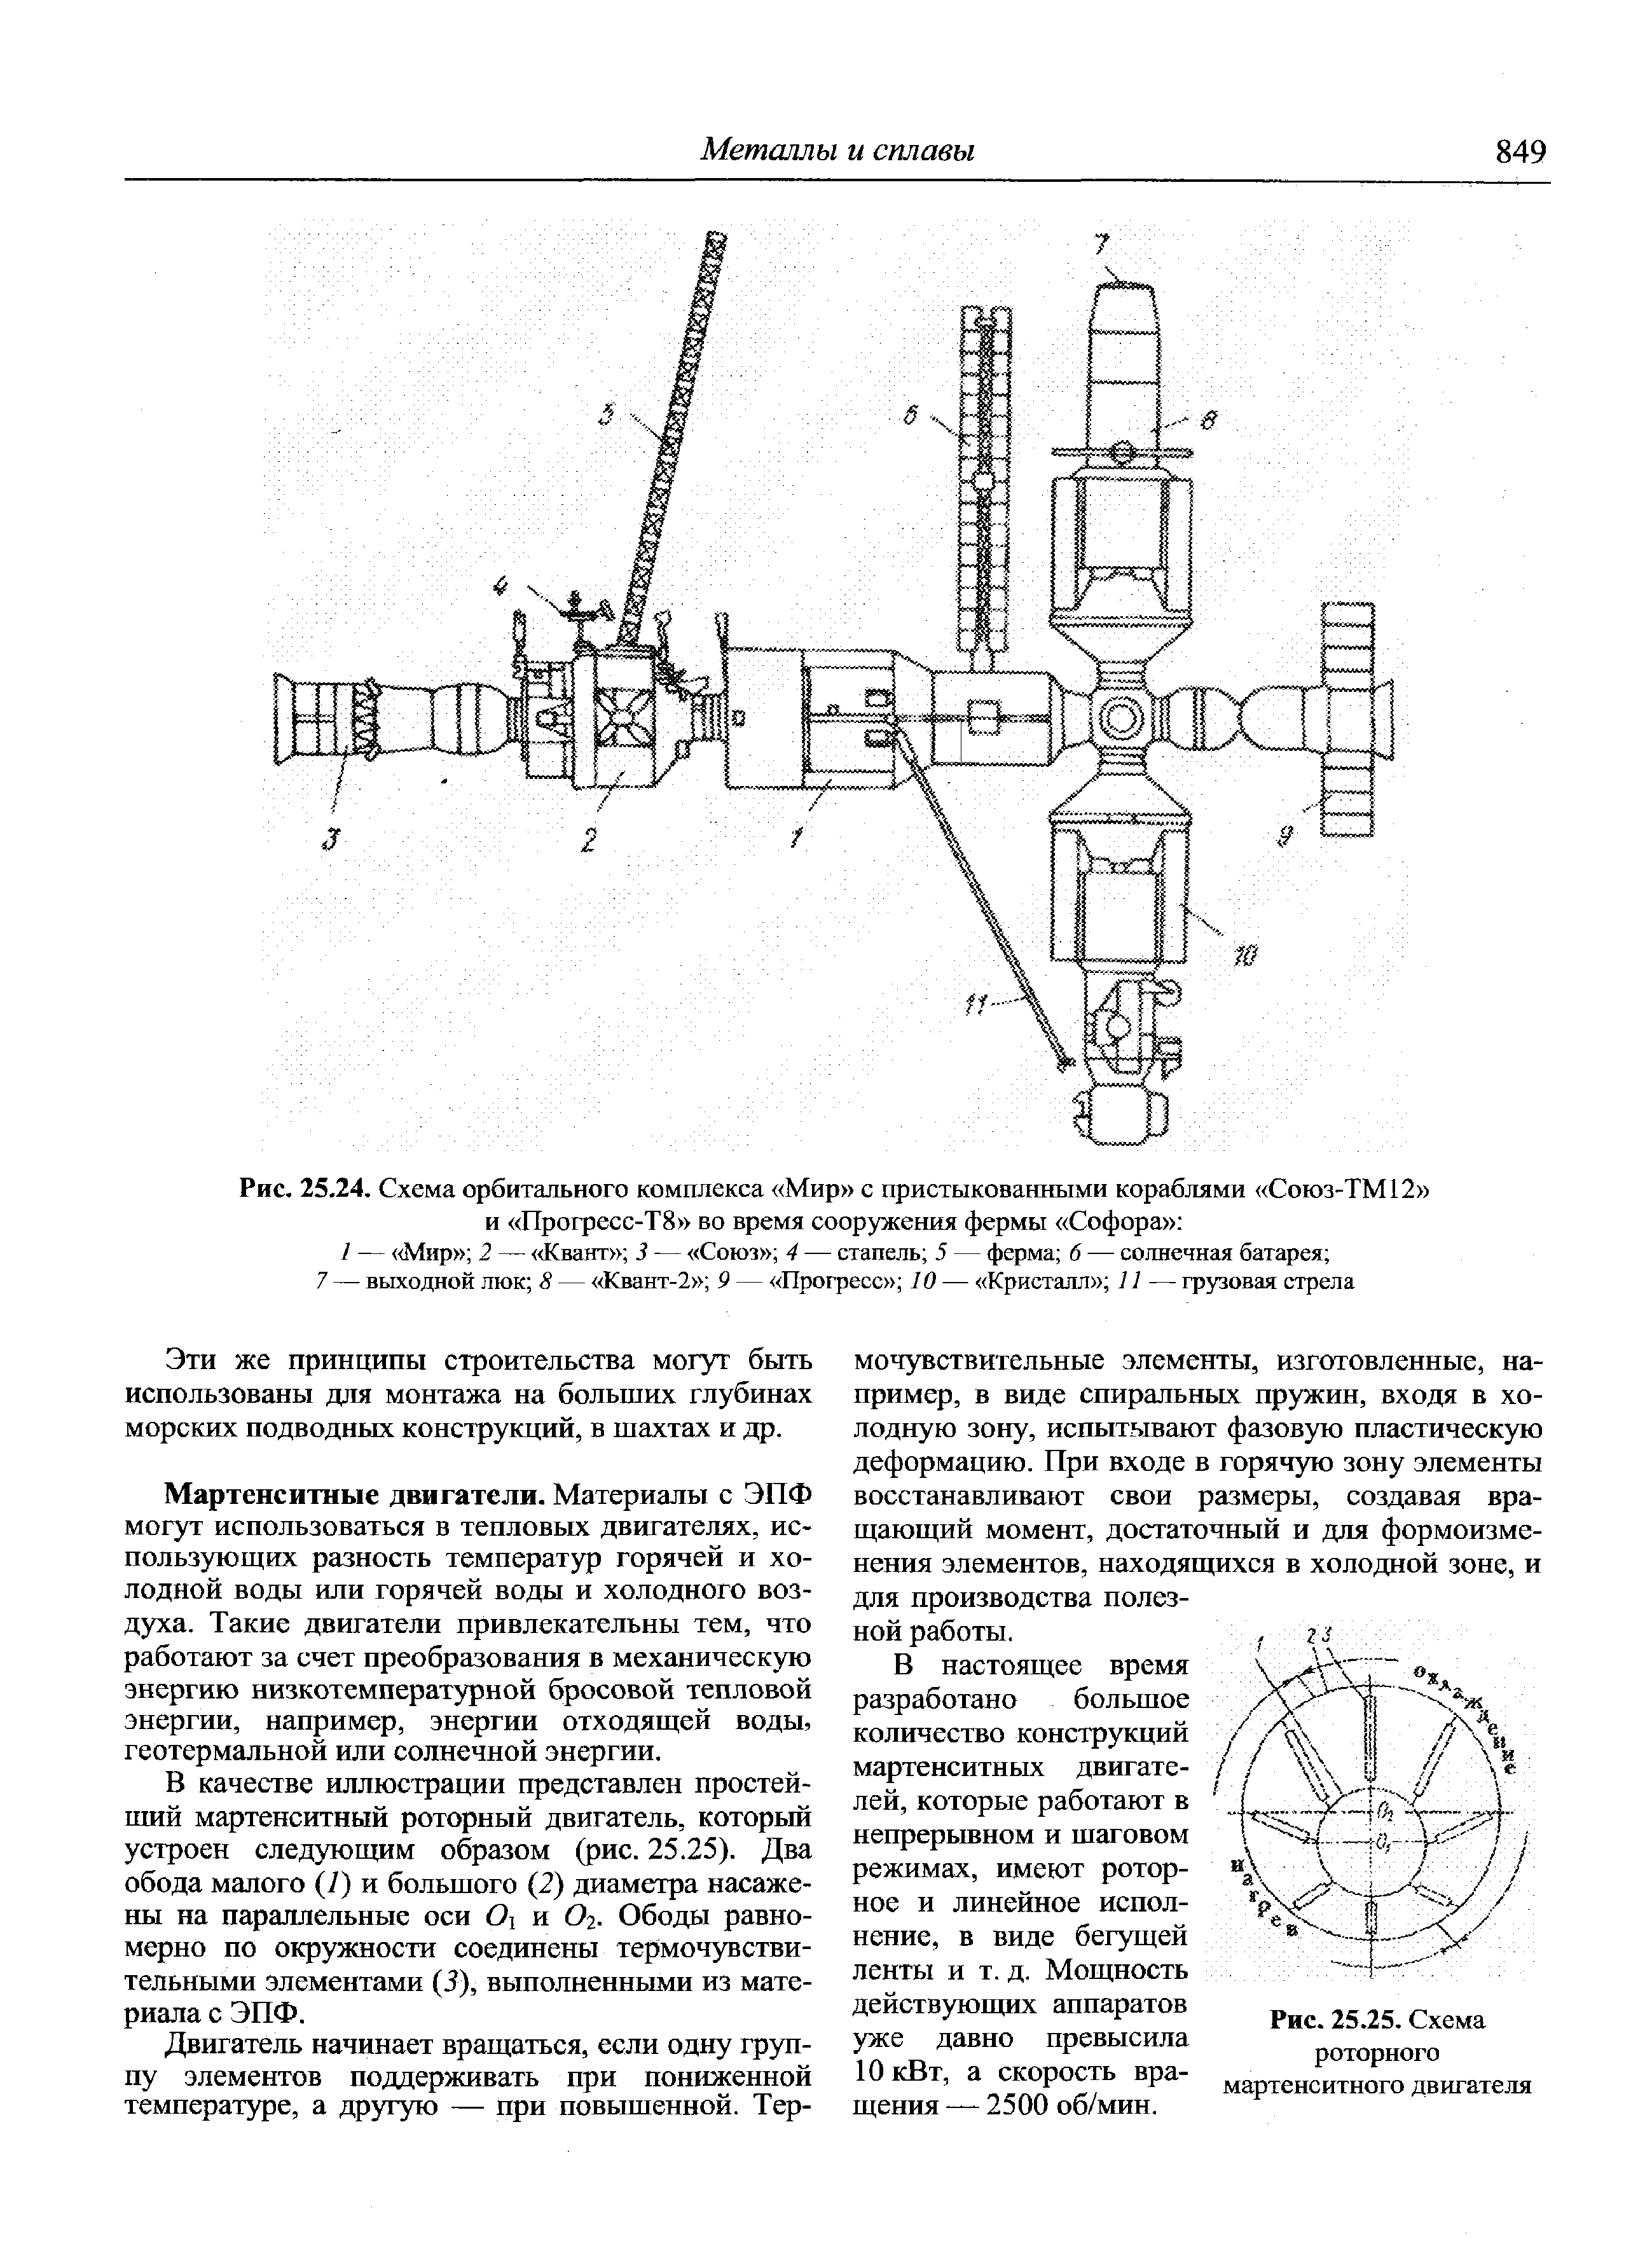 Рис. 25.25. Схема роторного мартенситного двигателя
